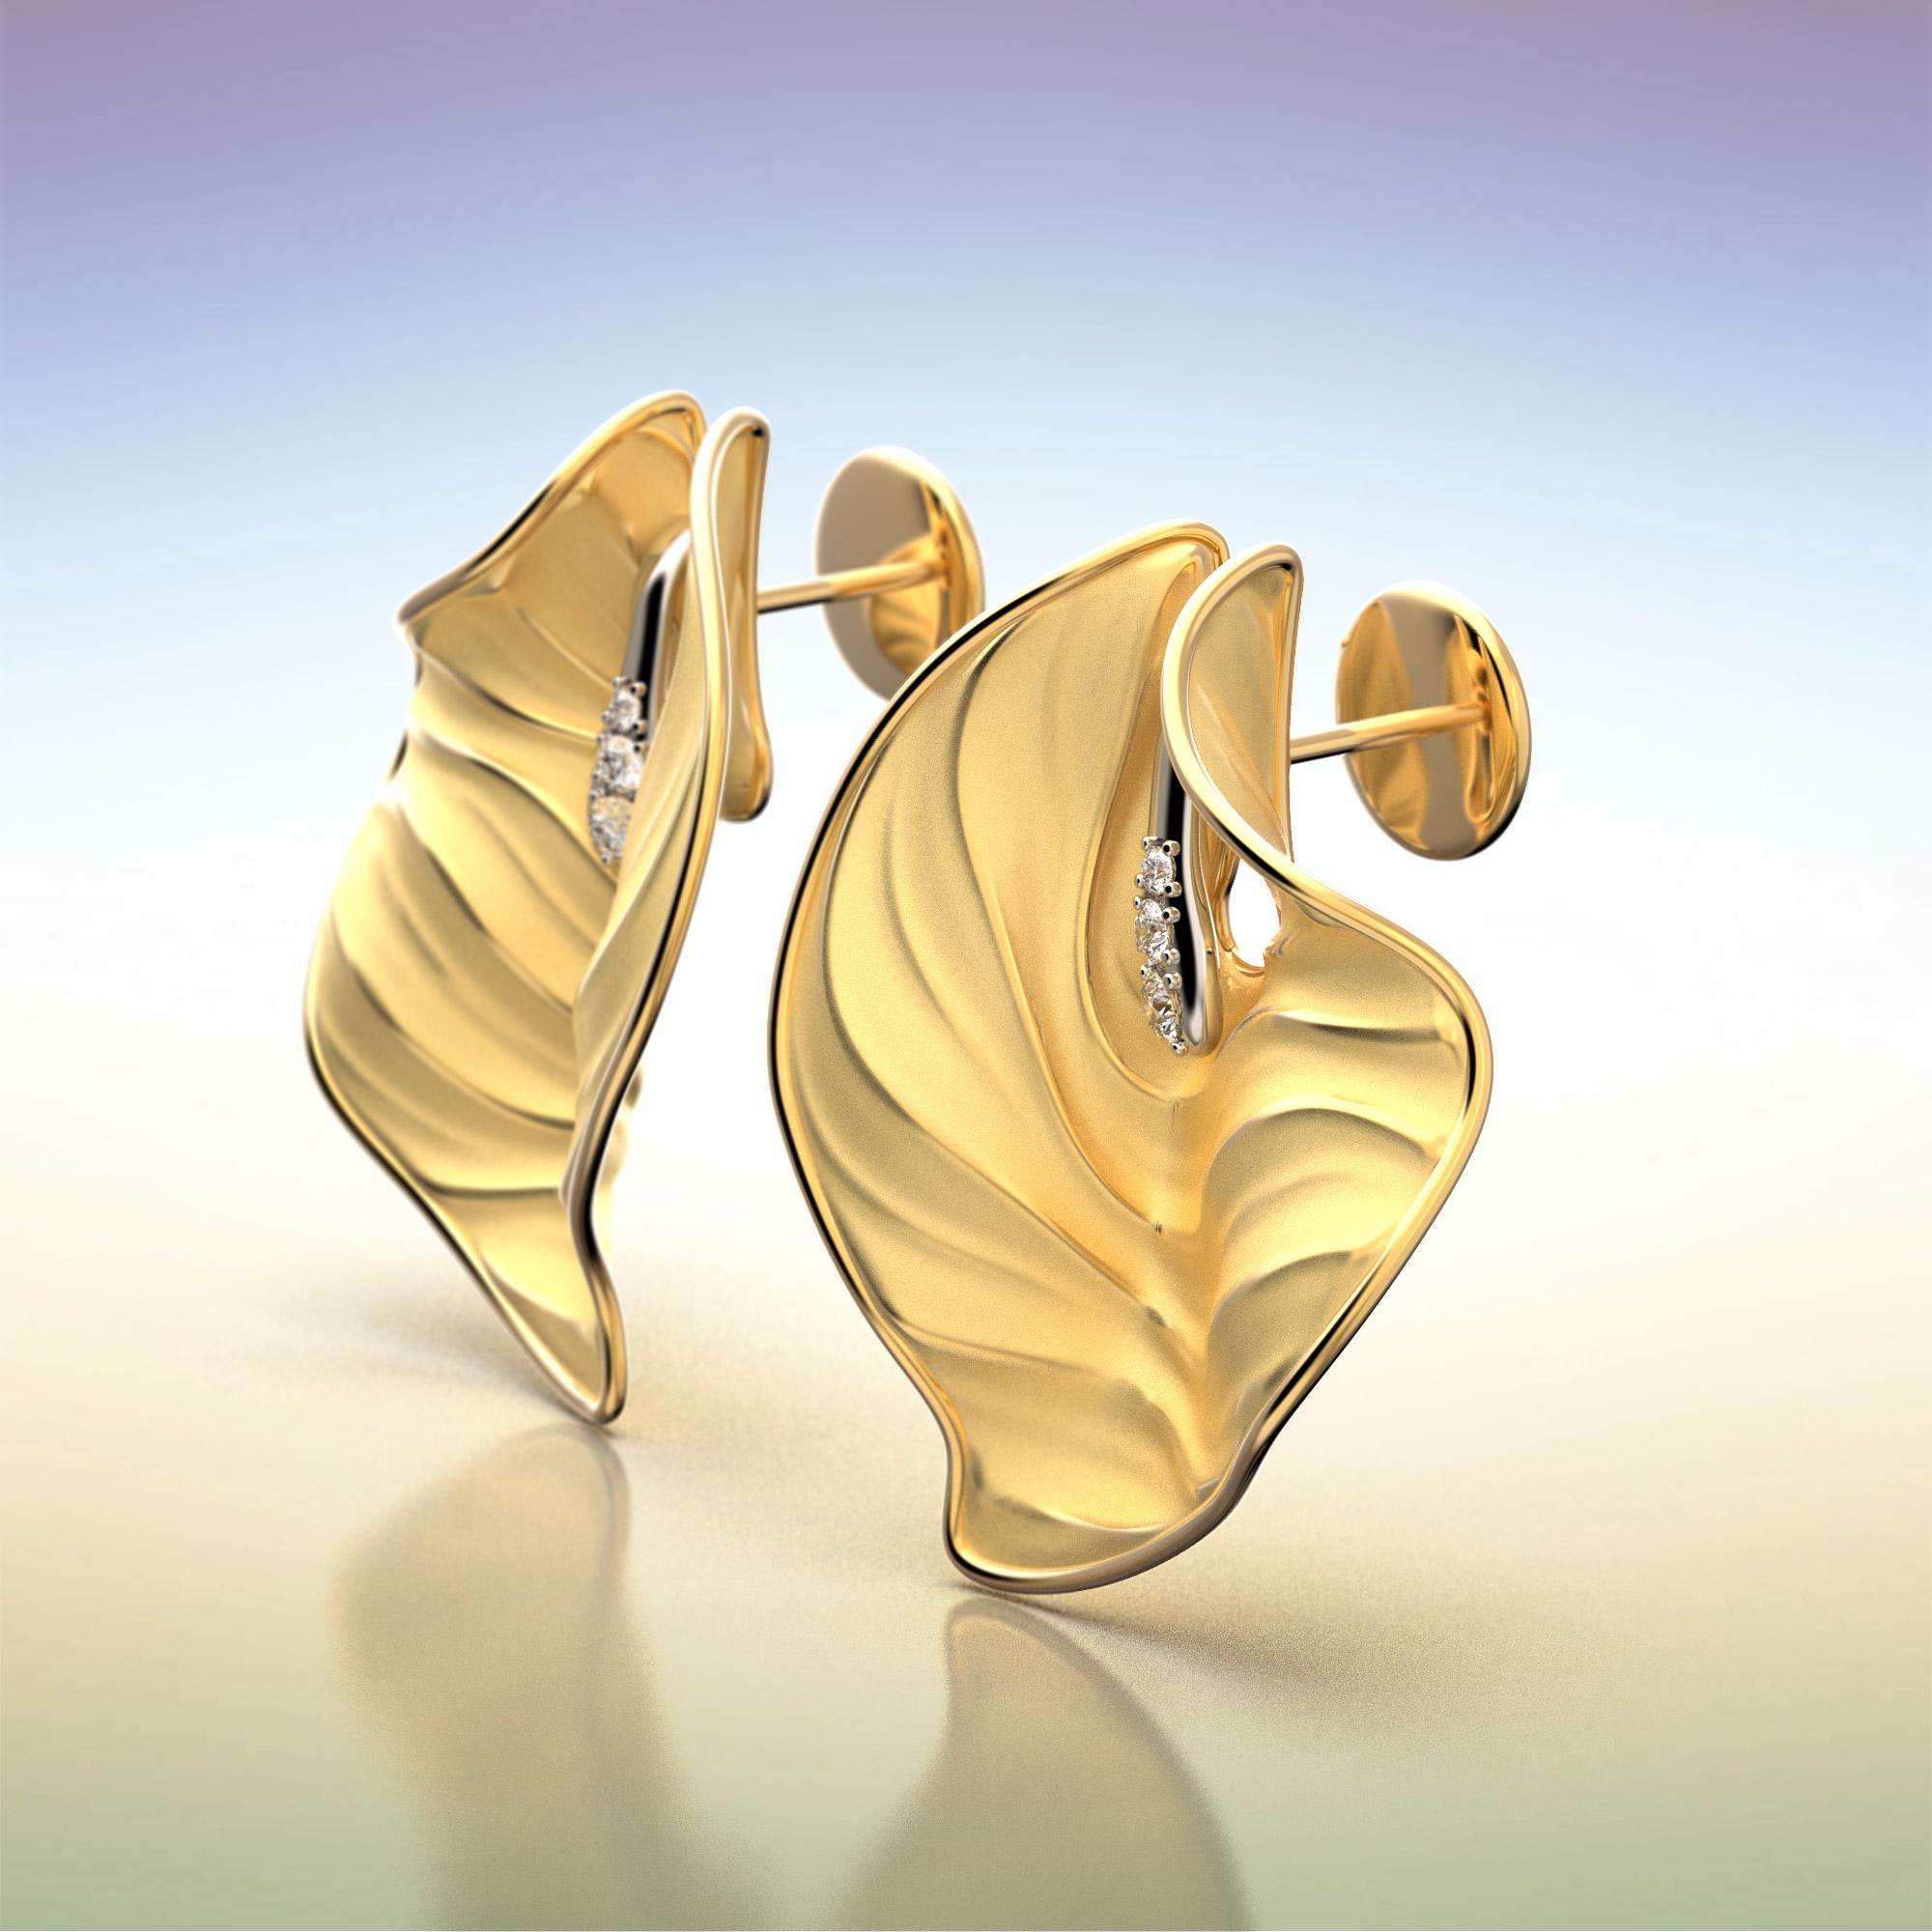 Brilliant Cut 18k Gold Diamond Earrings, Oltremare Gioielli Fine Jewelry Made in Italy For Sale